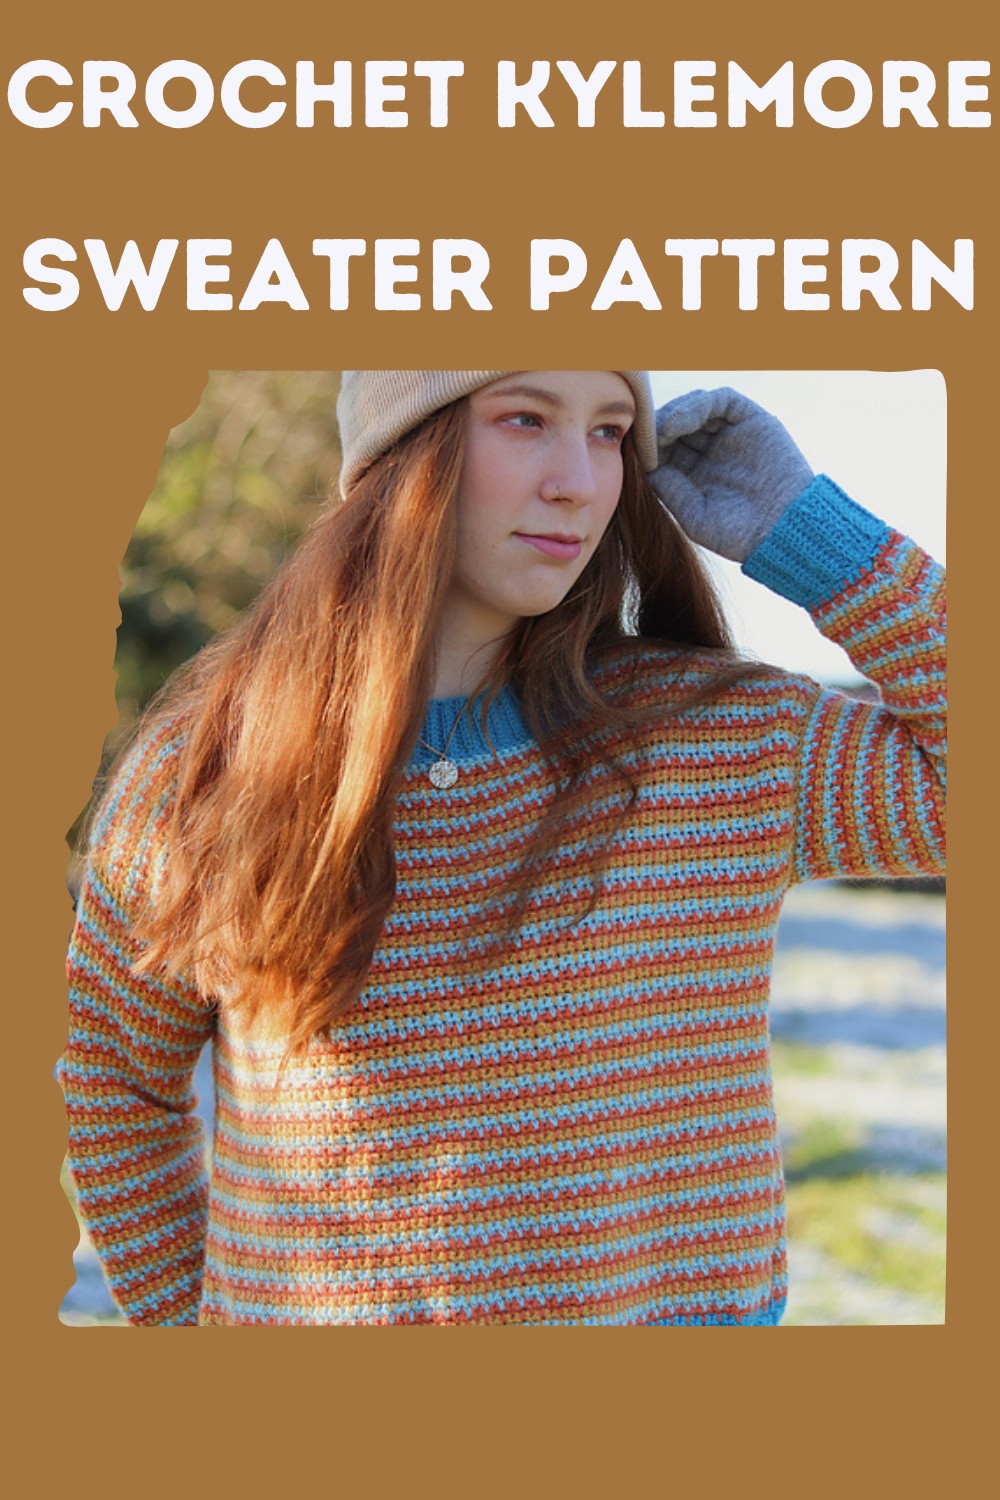 Crochet Kylemore Sweater Pattern